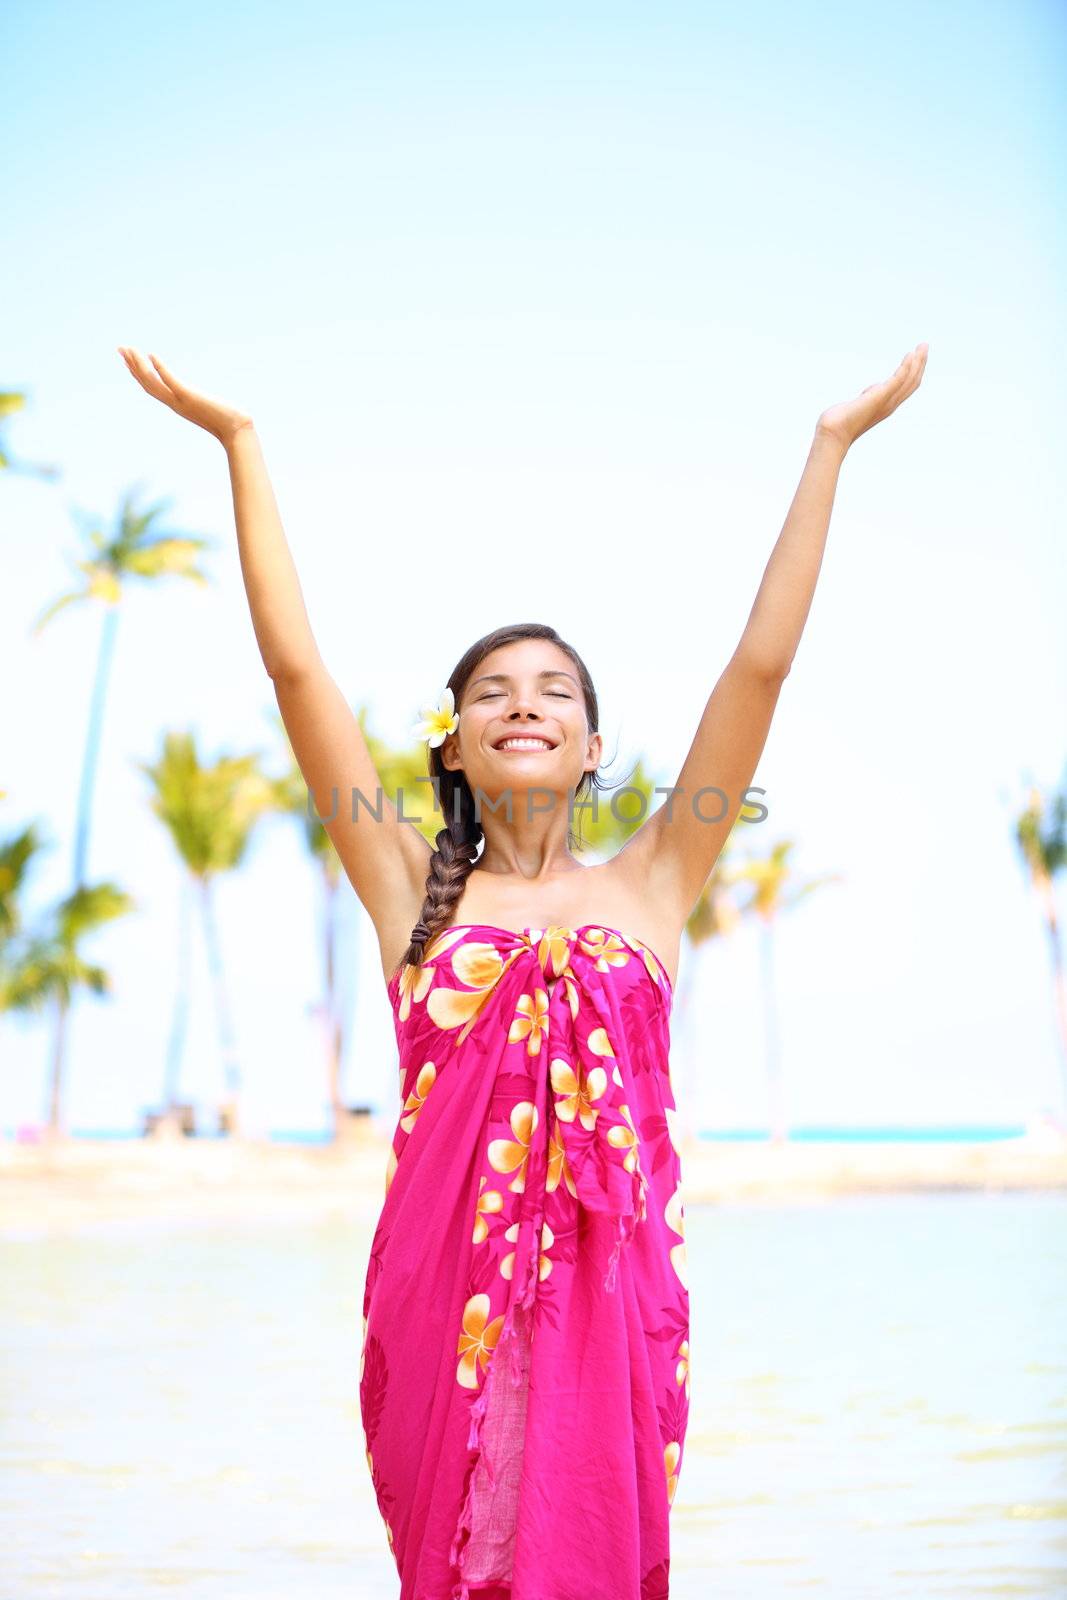 Free spiritual girl on hawaii on beach in meditation freedom pose enjoying Hawaiian beach smiling serene and happy looking up. Multicultural mixed race Asian / Caucasian girl in sarong.